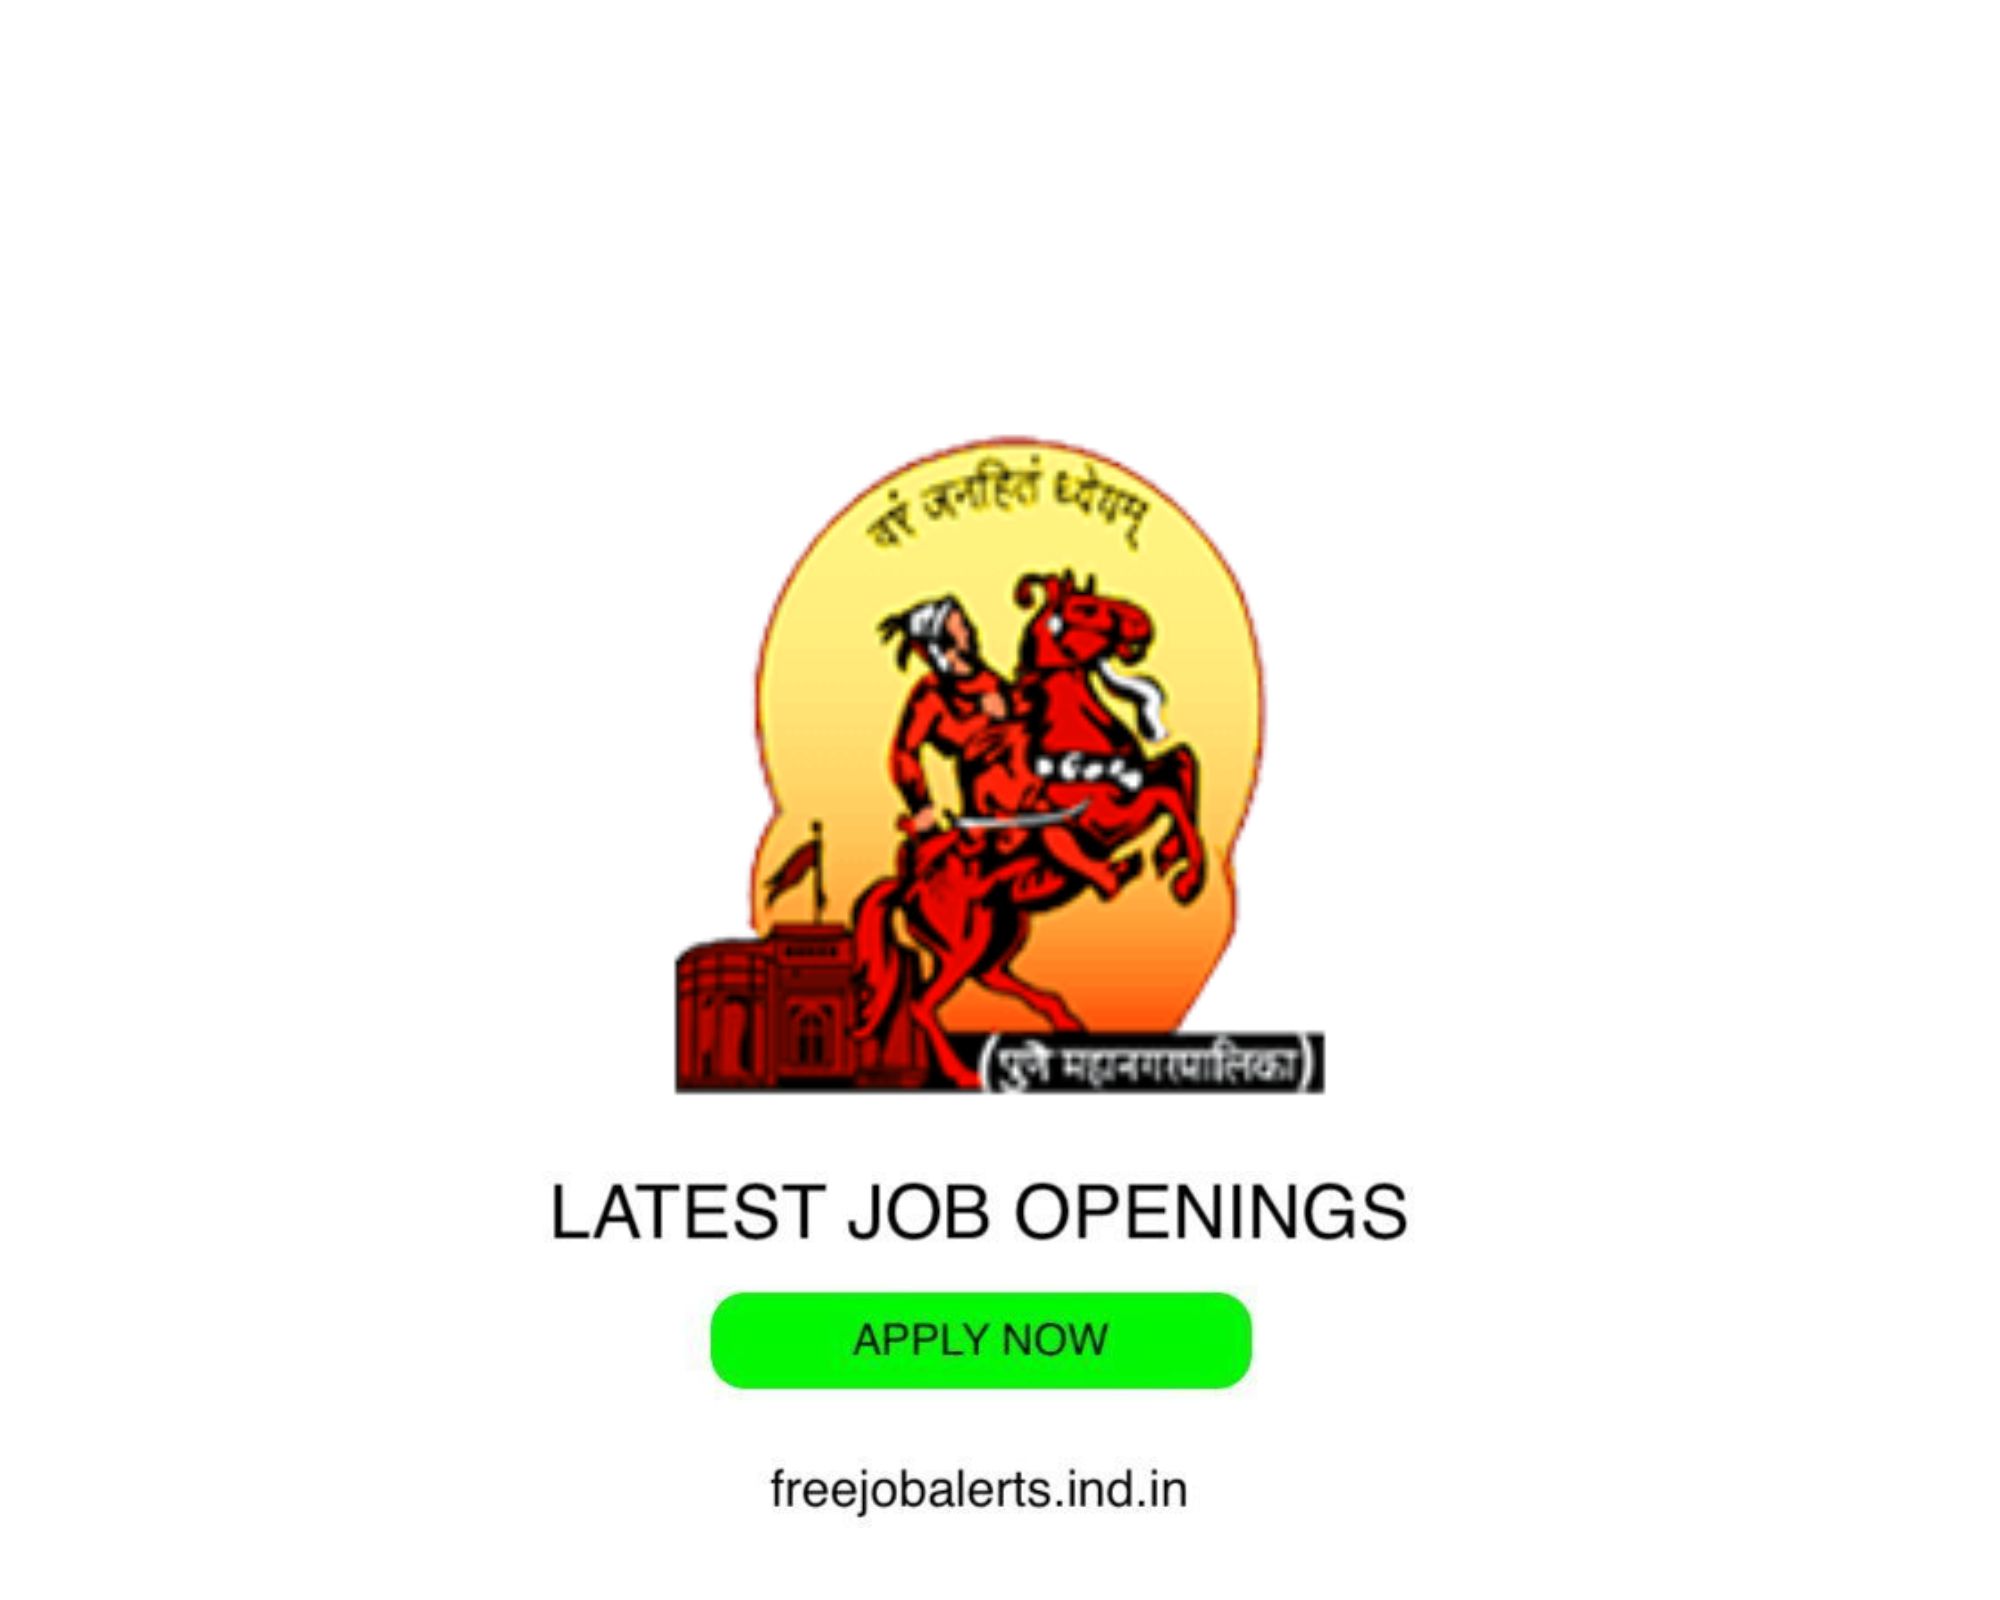 PMC - Pune Municipal Corporation - Latest Govt job openings - Free job alerts, Indian Govt Jobs